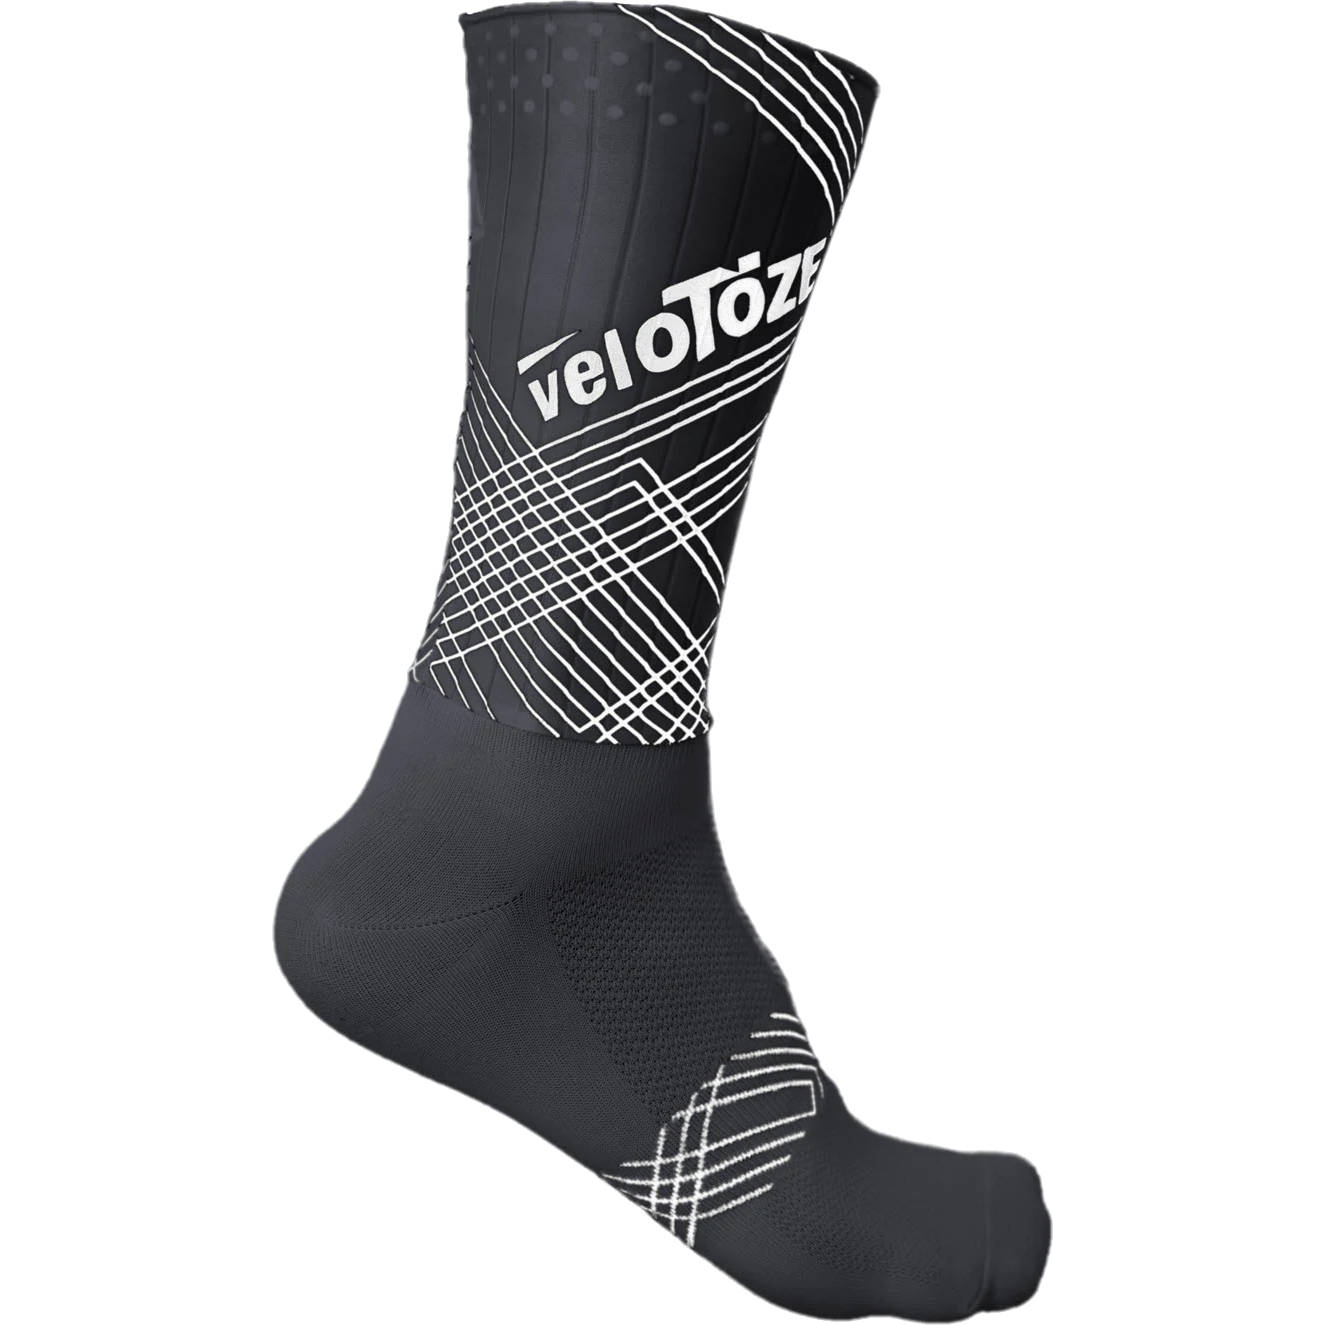 Productfoto van veloToze Aero Socks - black